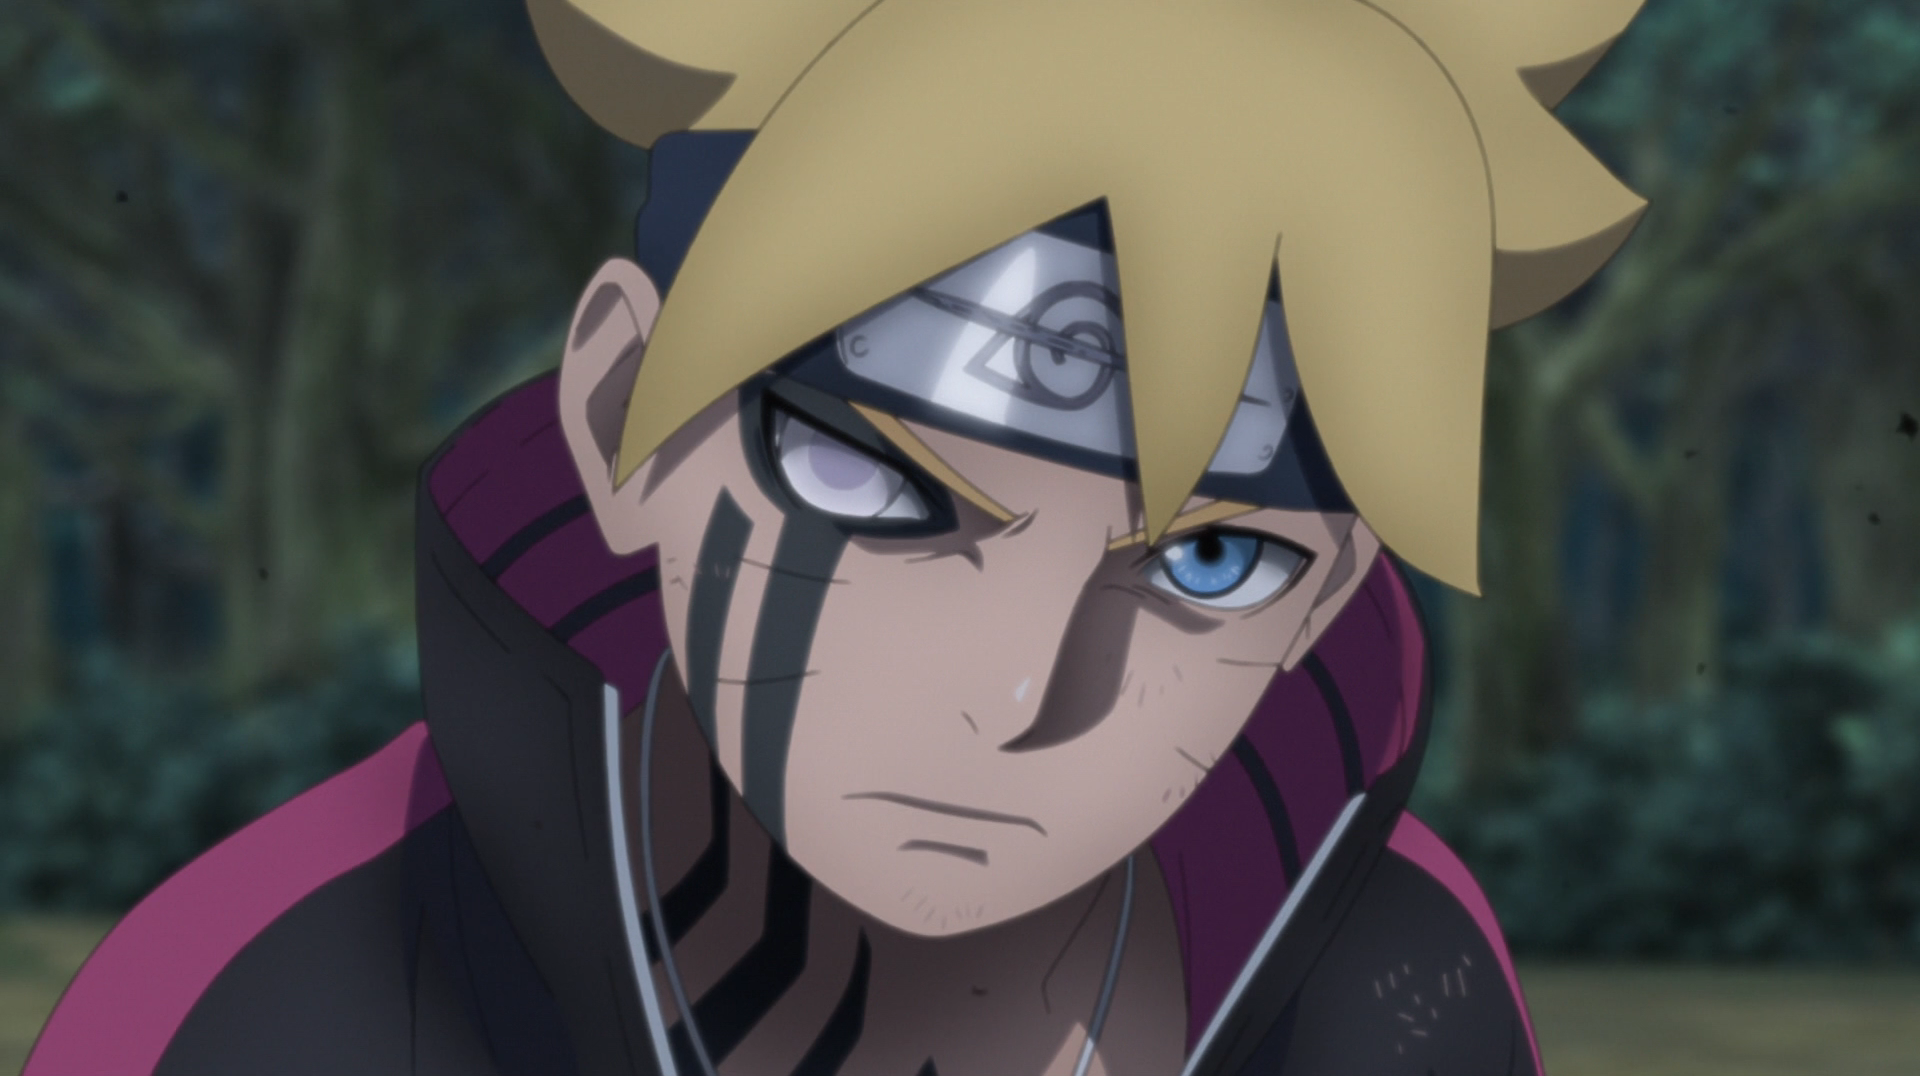 Boruto: Naruto Next: episódio 289 já disponível em 2023